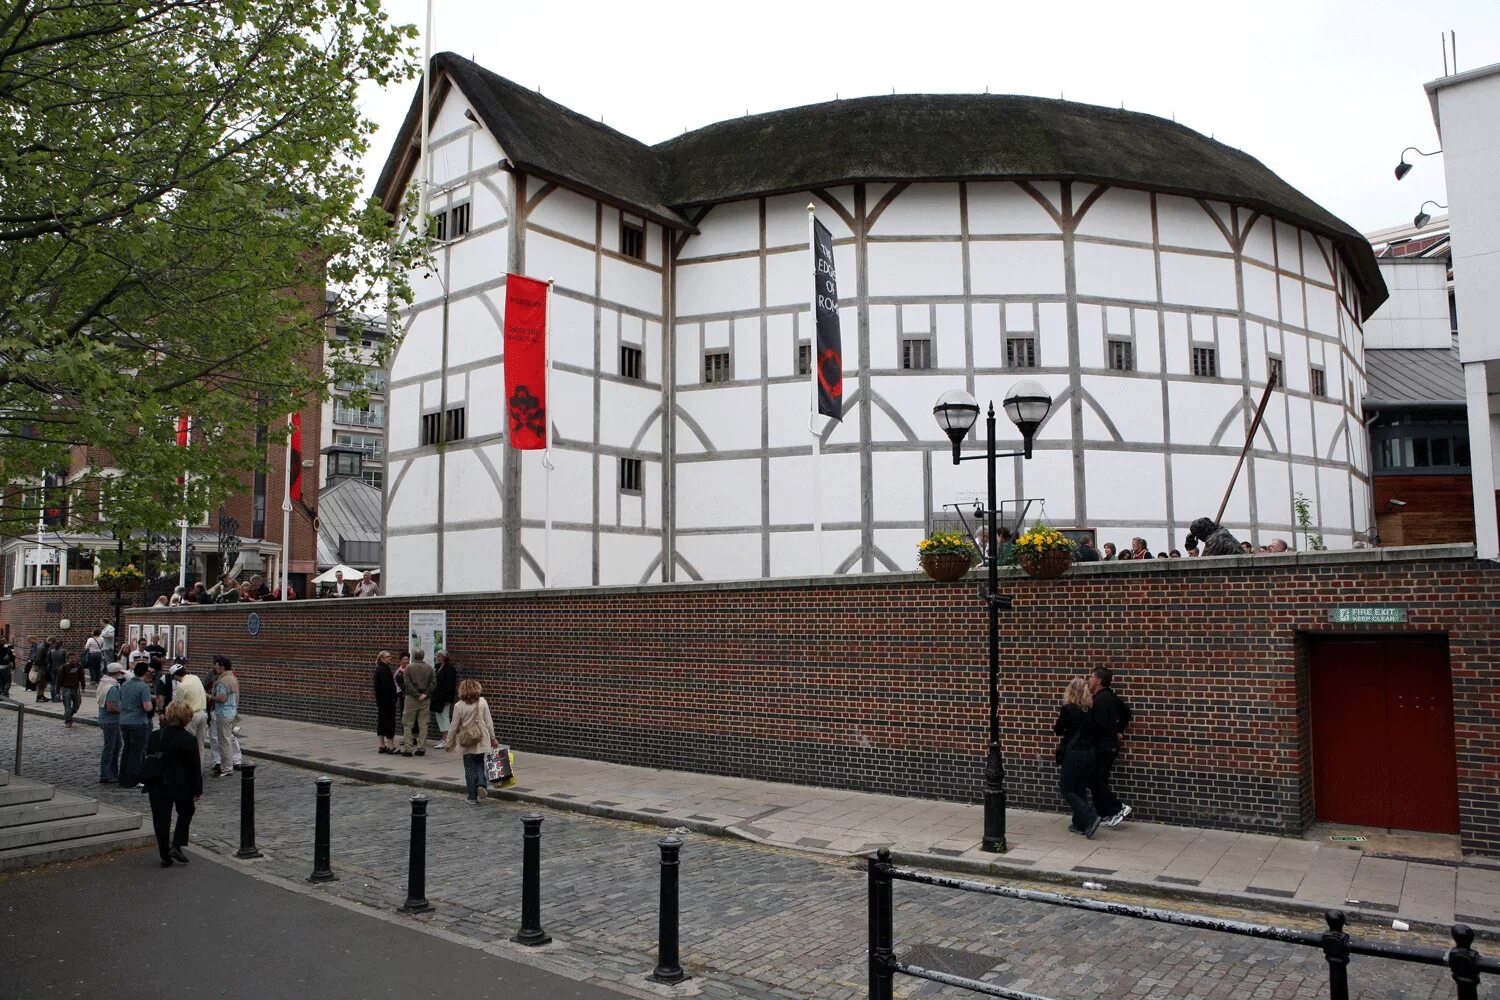 Shakespeare globe theatre